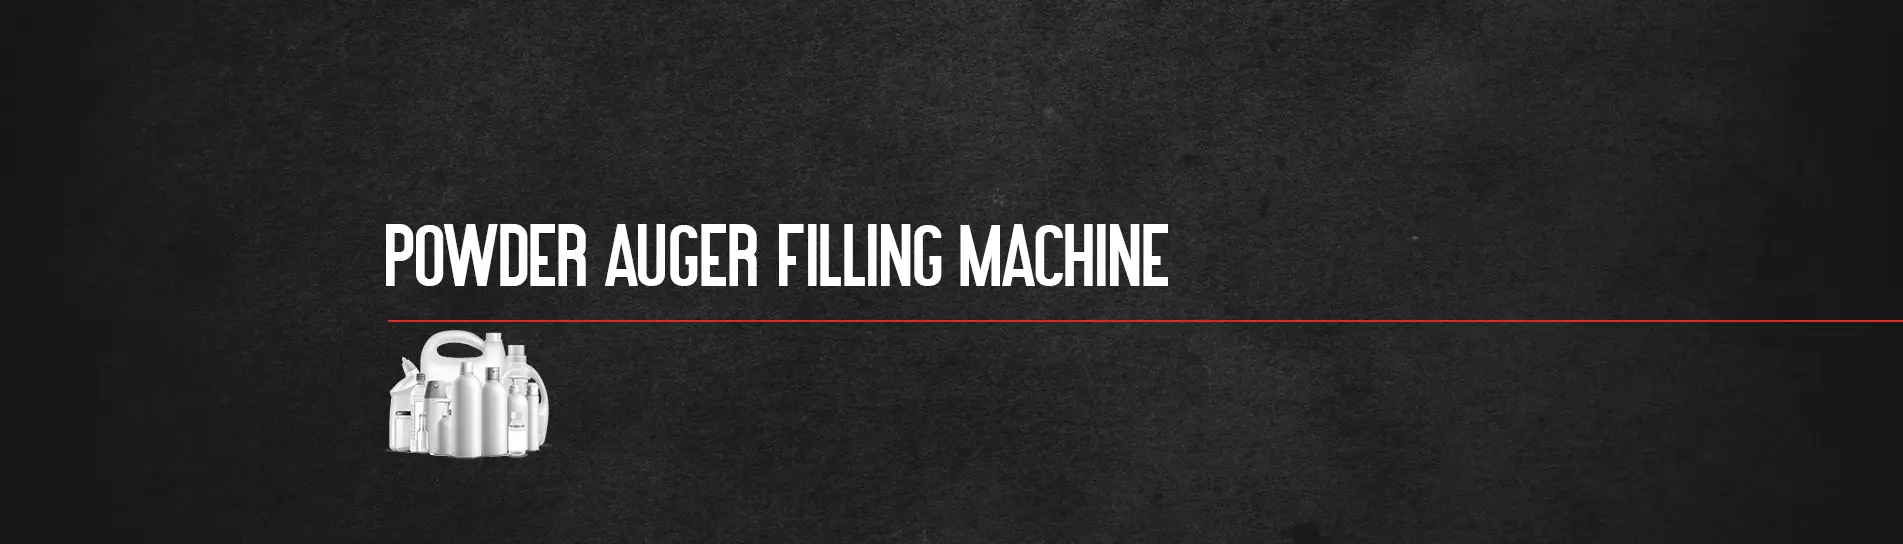 Powder Auger Filling Machine